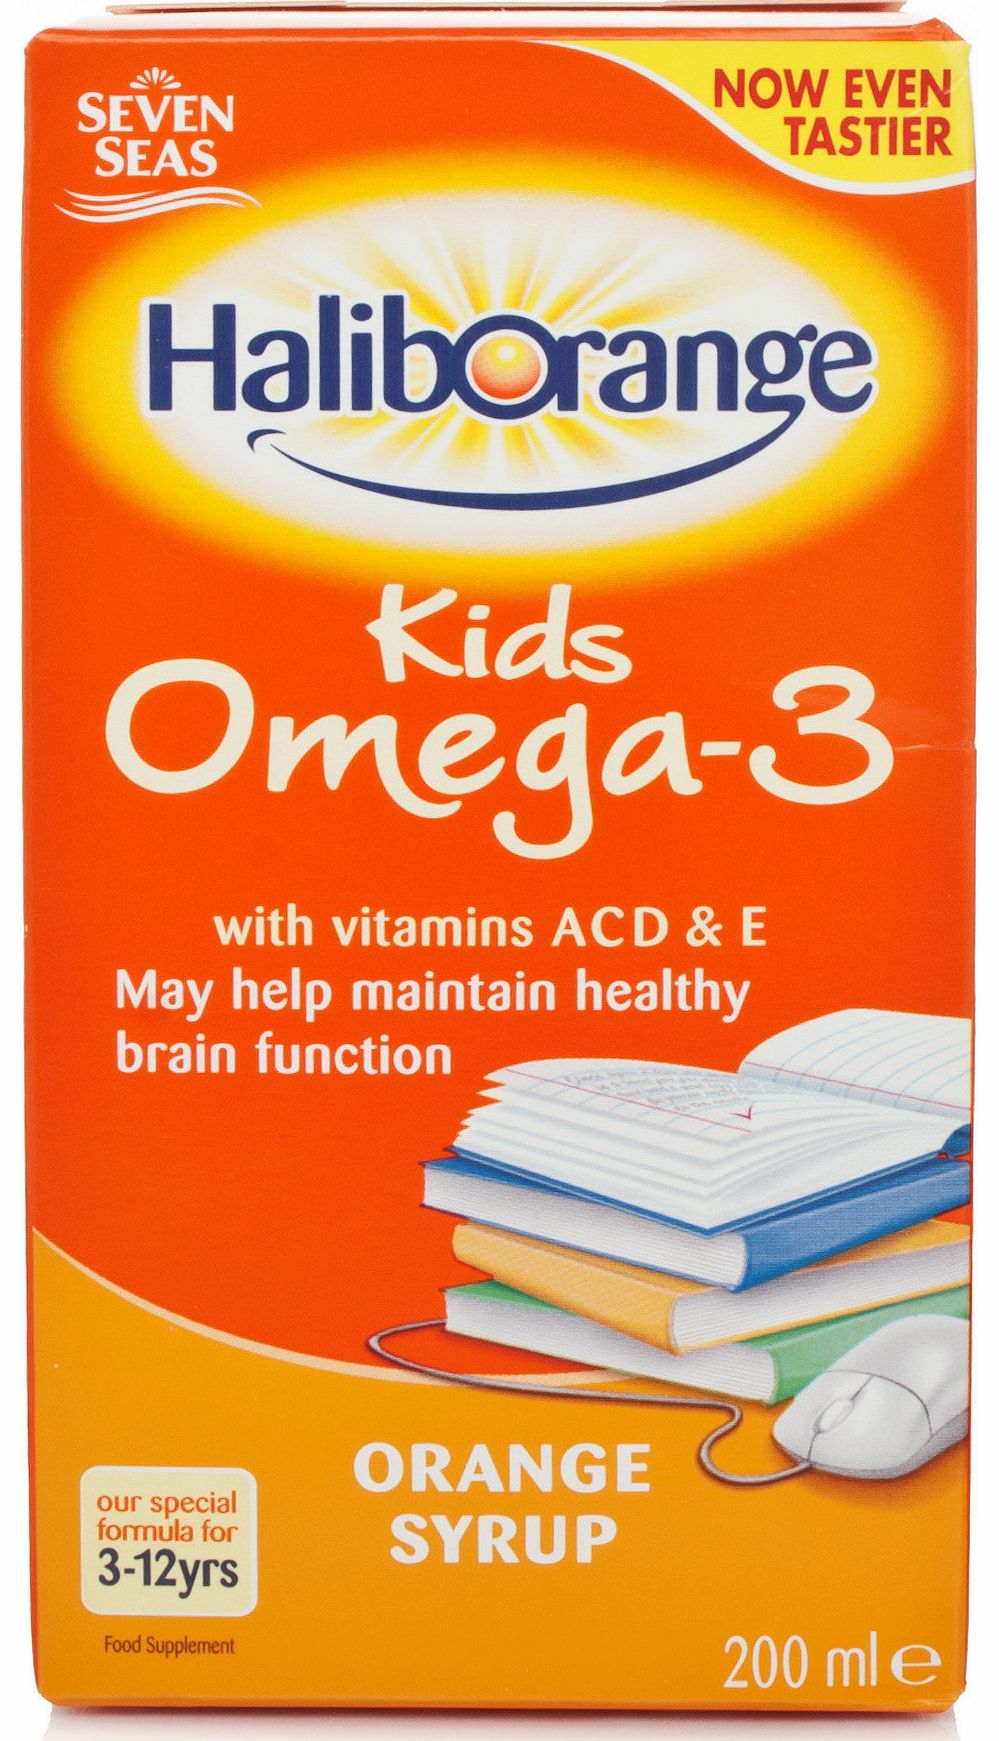 Seven Seas Haliborange Kids Omega-3 Orange Syrup